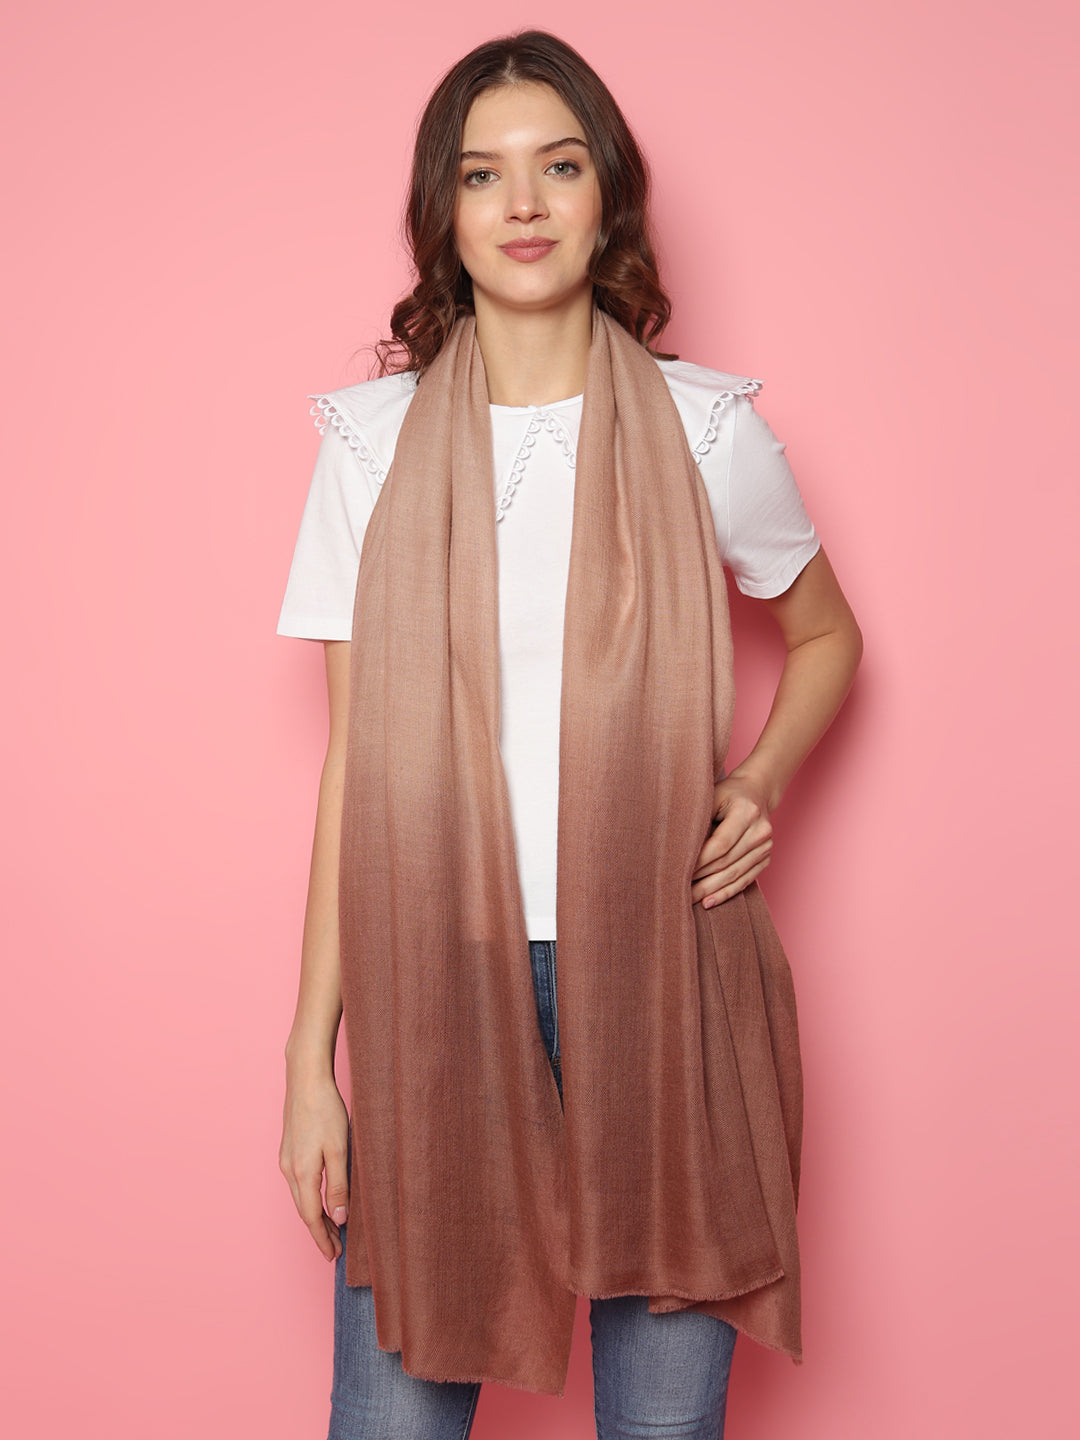 kashmir shawl online, winter stole for ladies, pashmina kashmir, shawl for winter